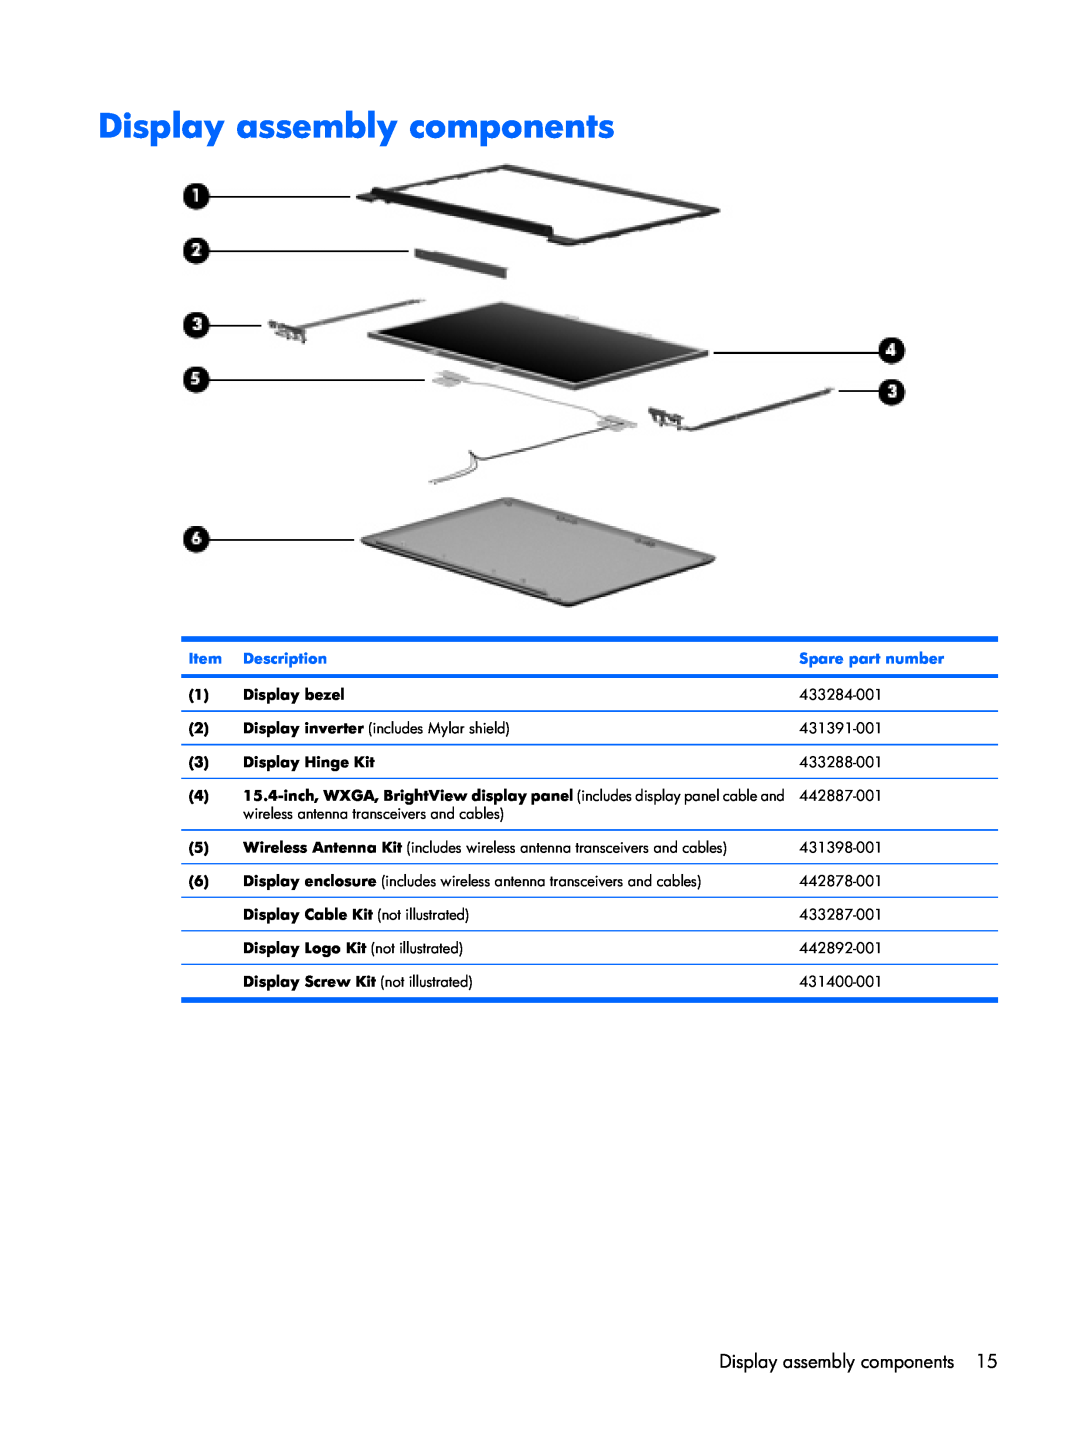 Compaq F500 manual Display assembly components, Description, Spare part number 